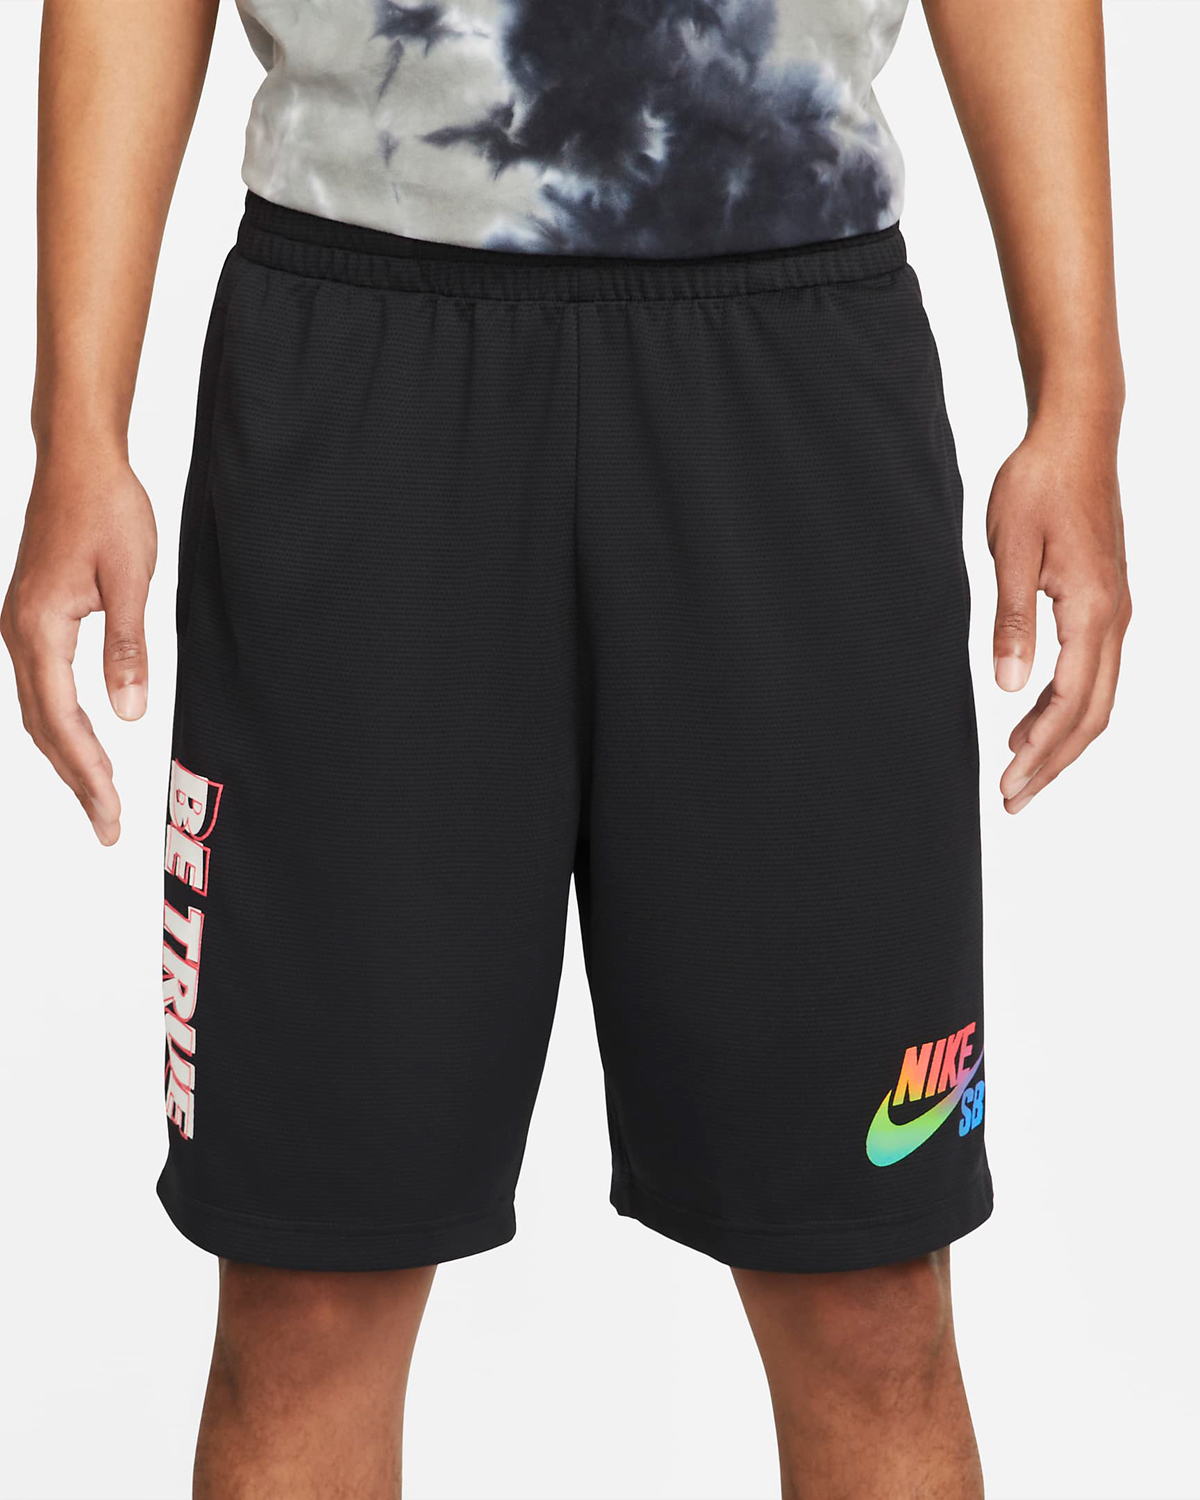 Nike-Be-True-Shorts-Black